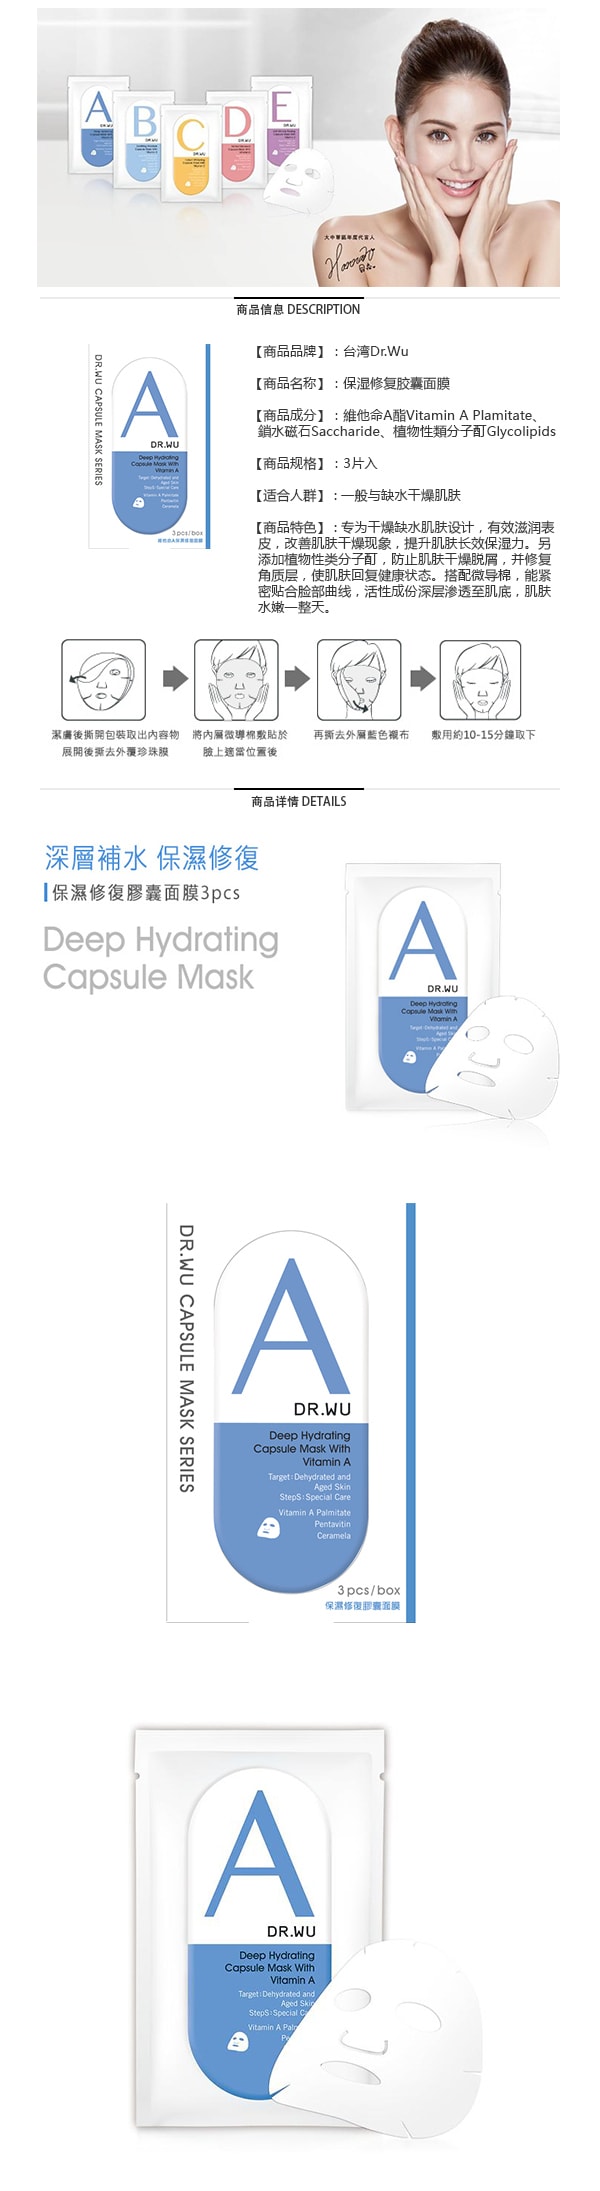 Deep Hydrating Capsule Mask 3sheets